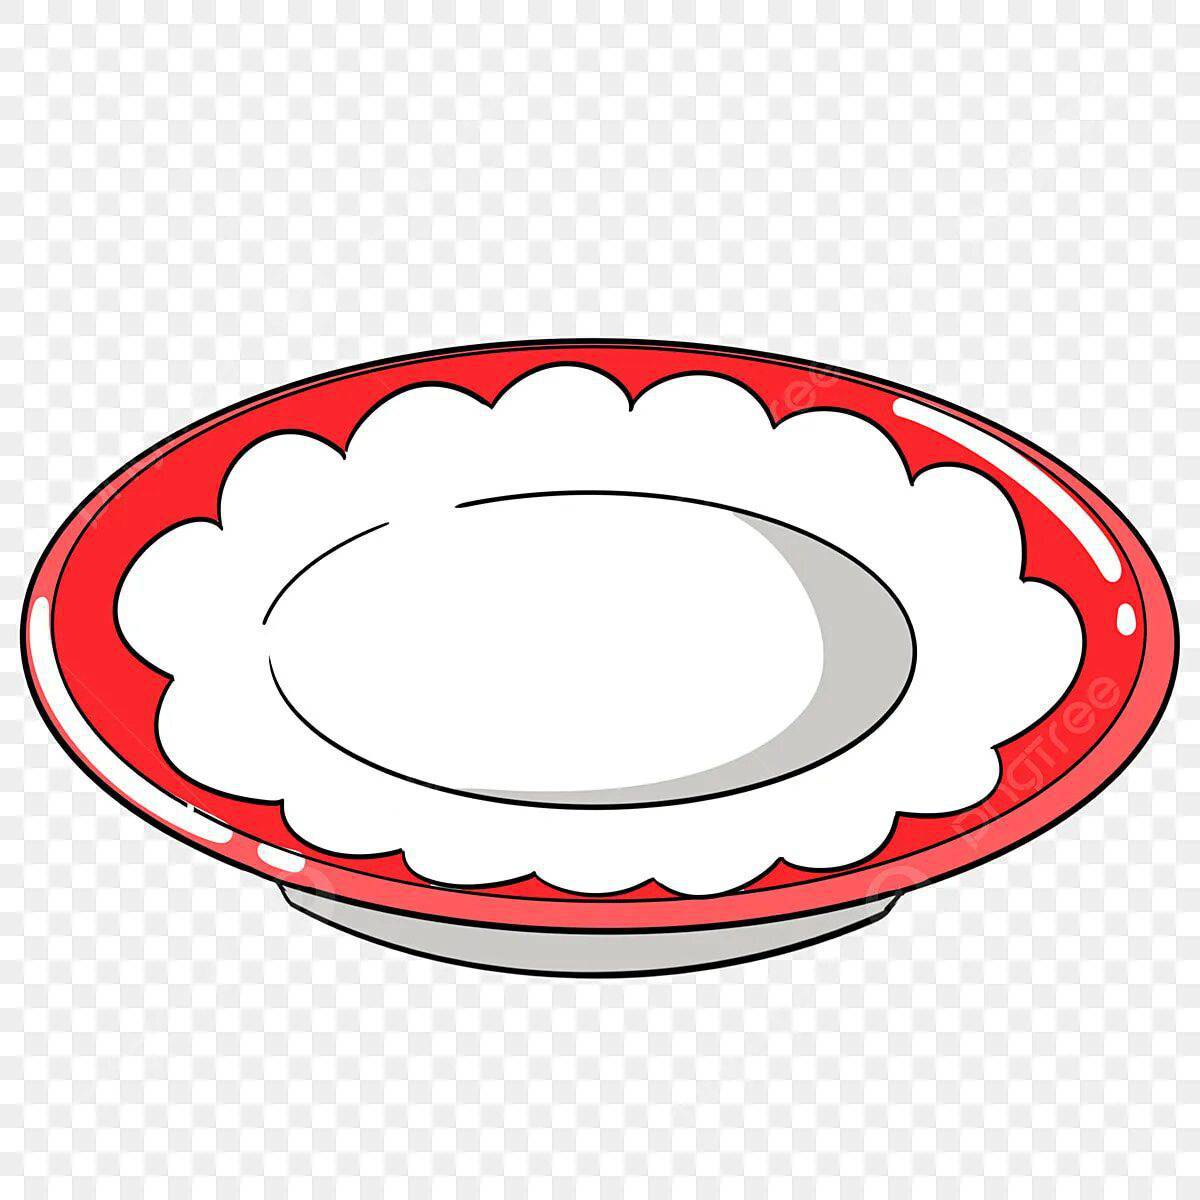 Картинка для детей тарелка #33